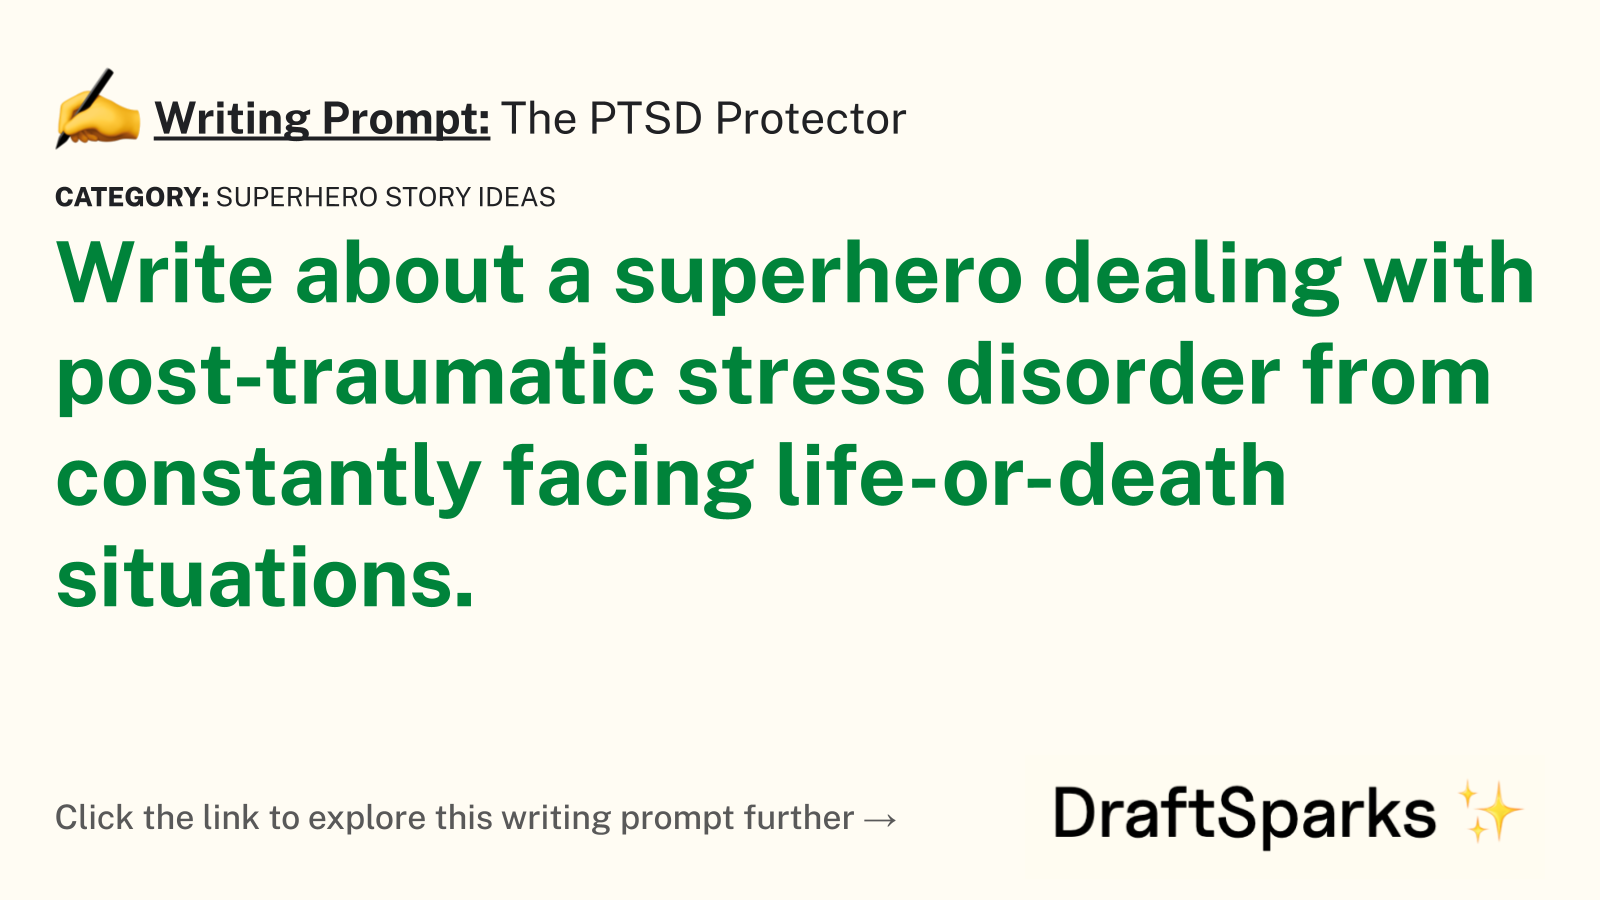 The PTSD Protector